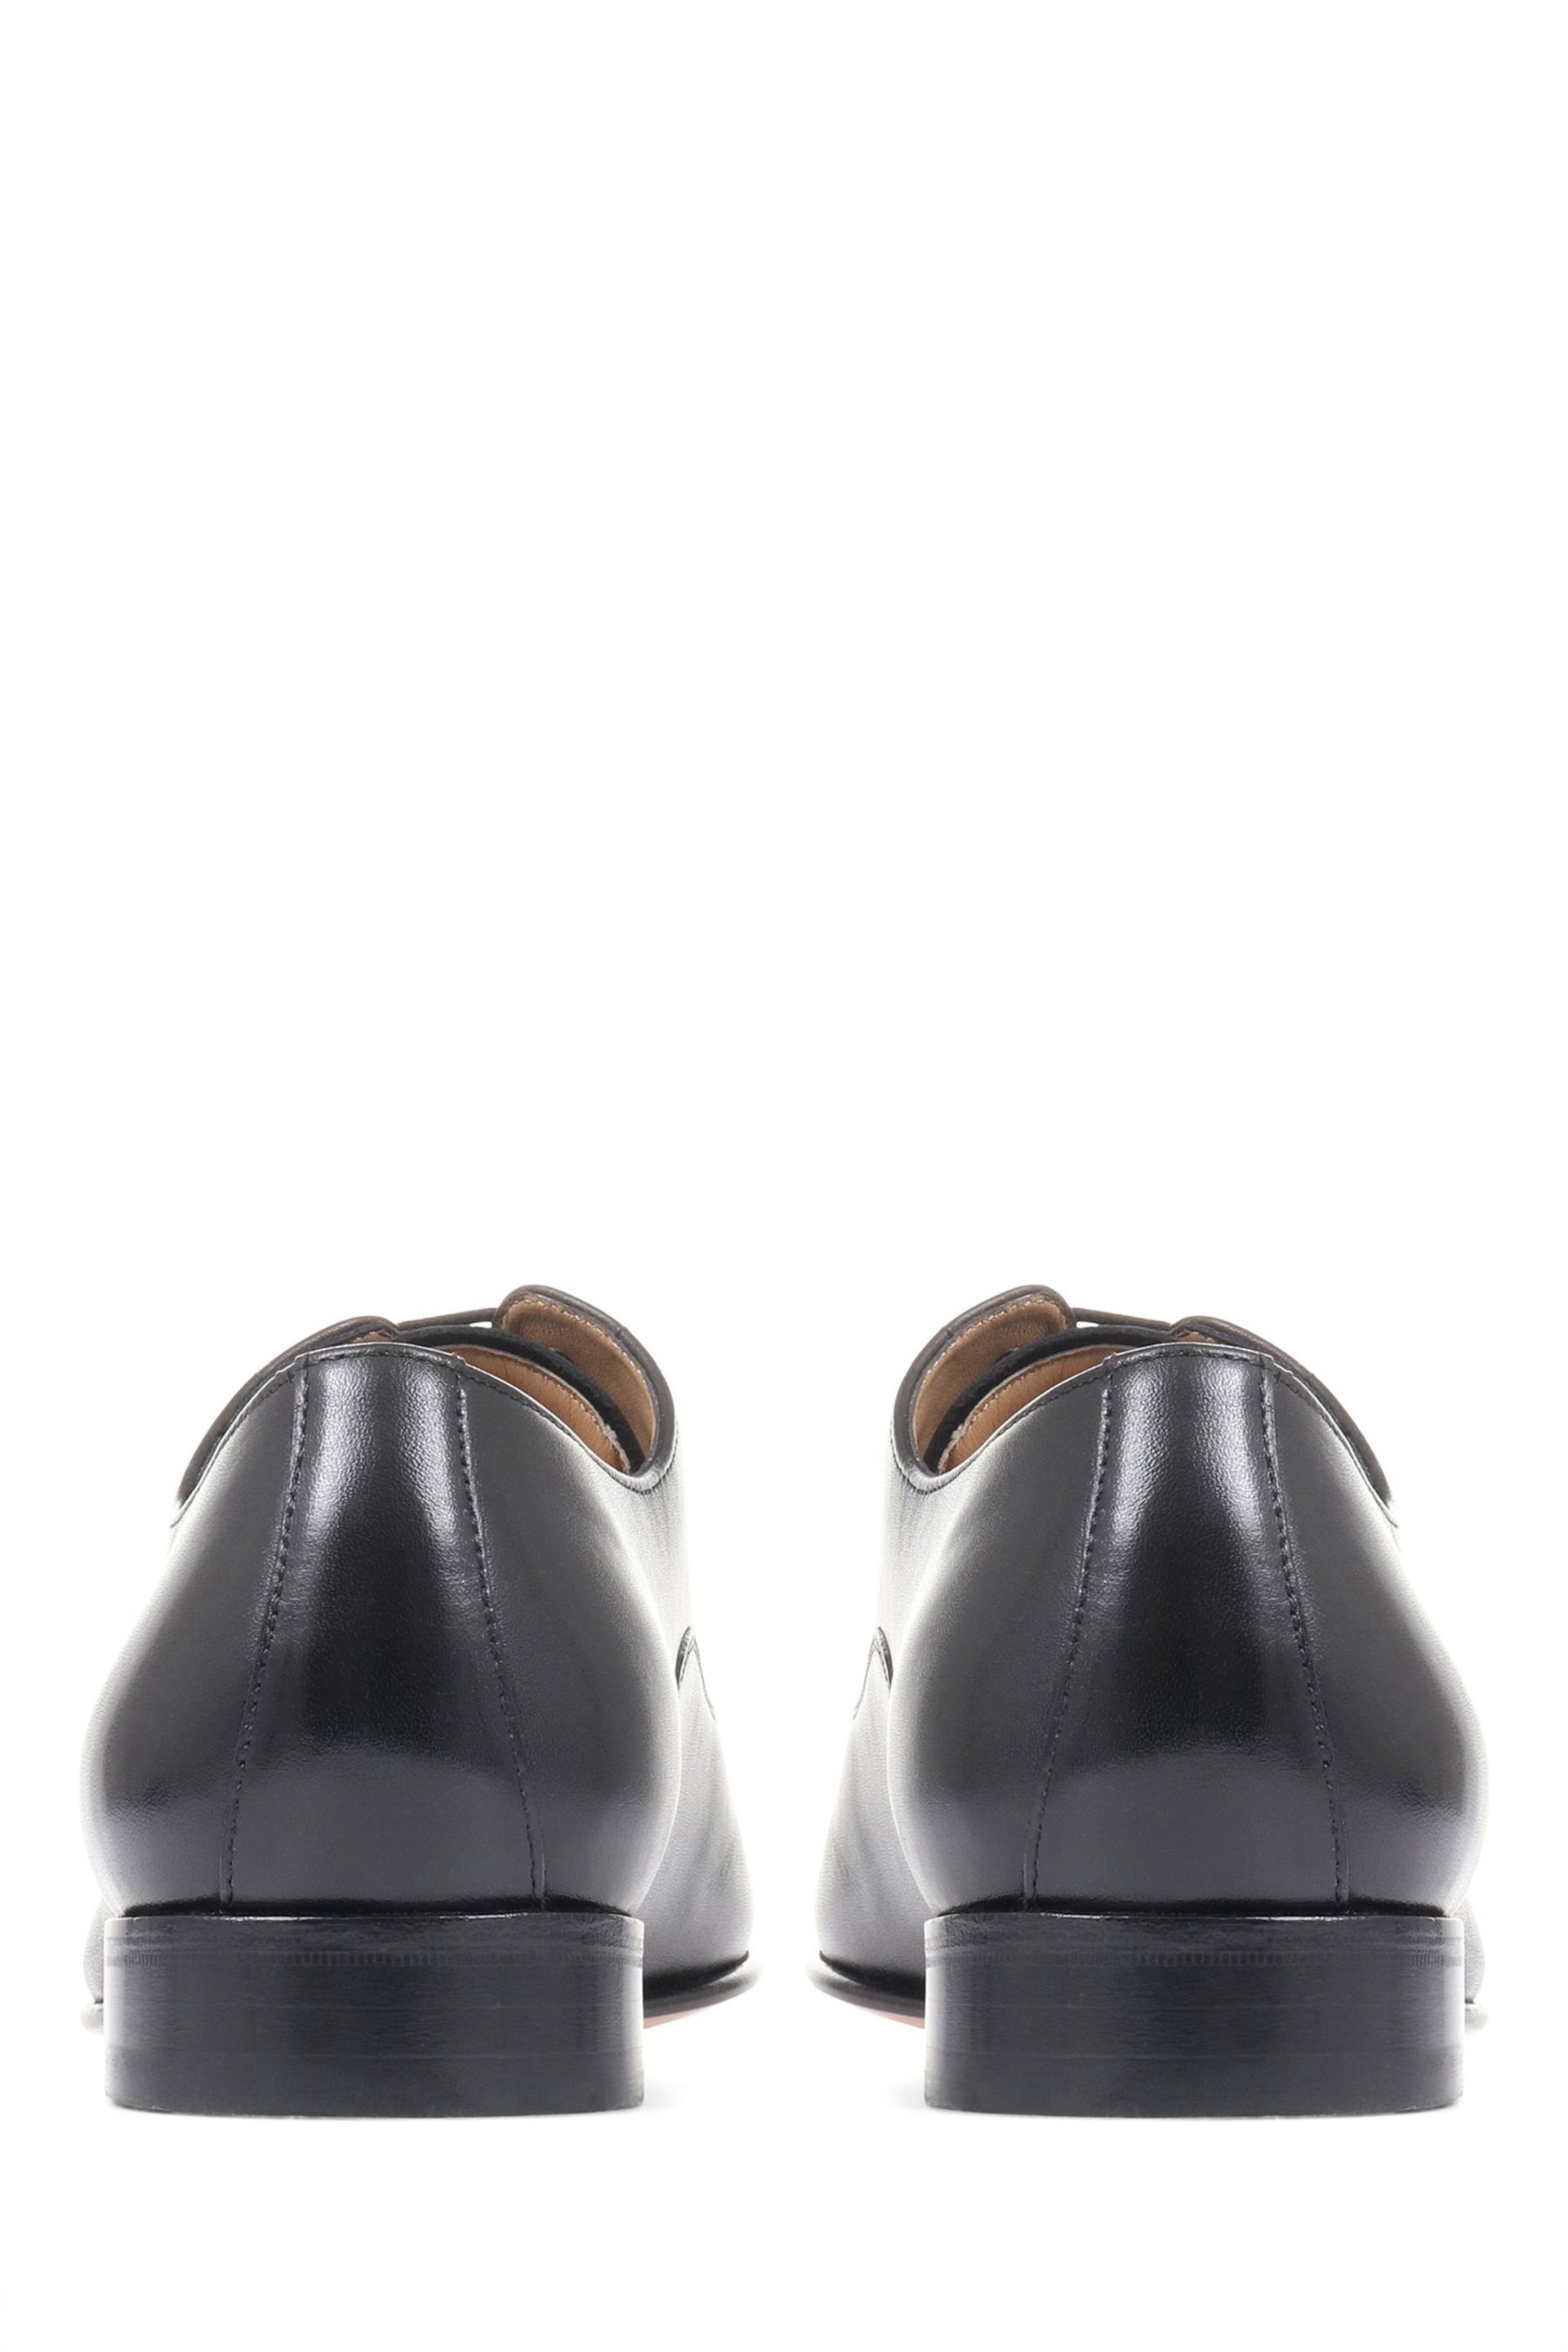 Jones Bootmaker Black Morpeth Leather Oxford Shoes - Image 3 of 5